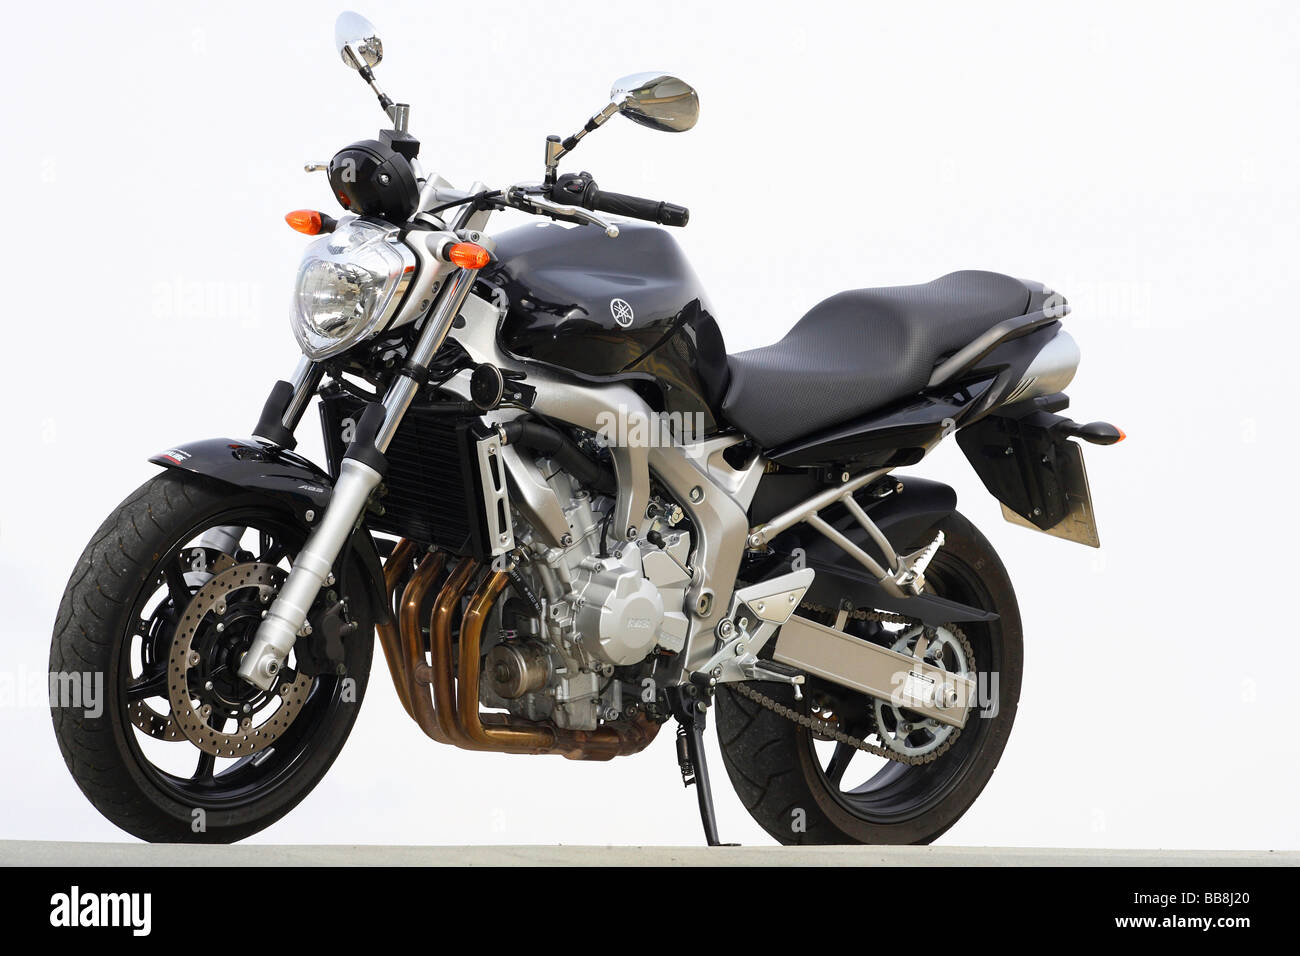 Yamaha FZ6 motociclo Foto stock - Alamy